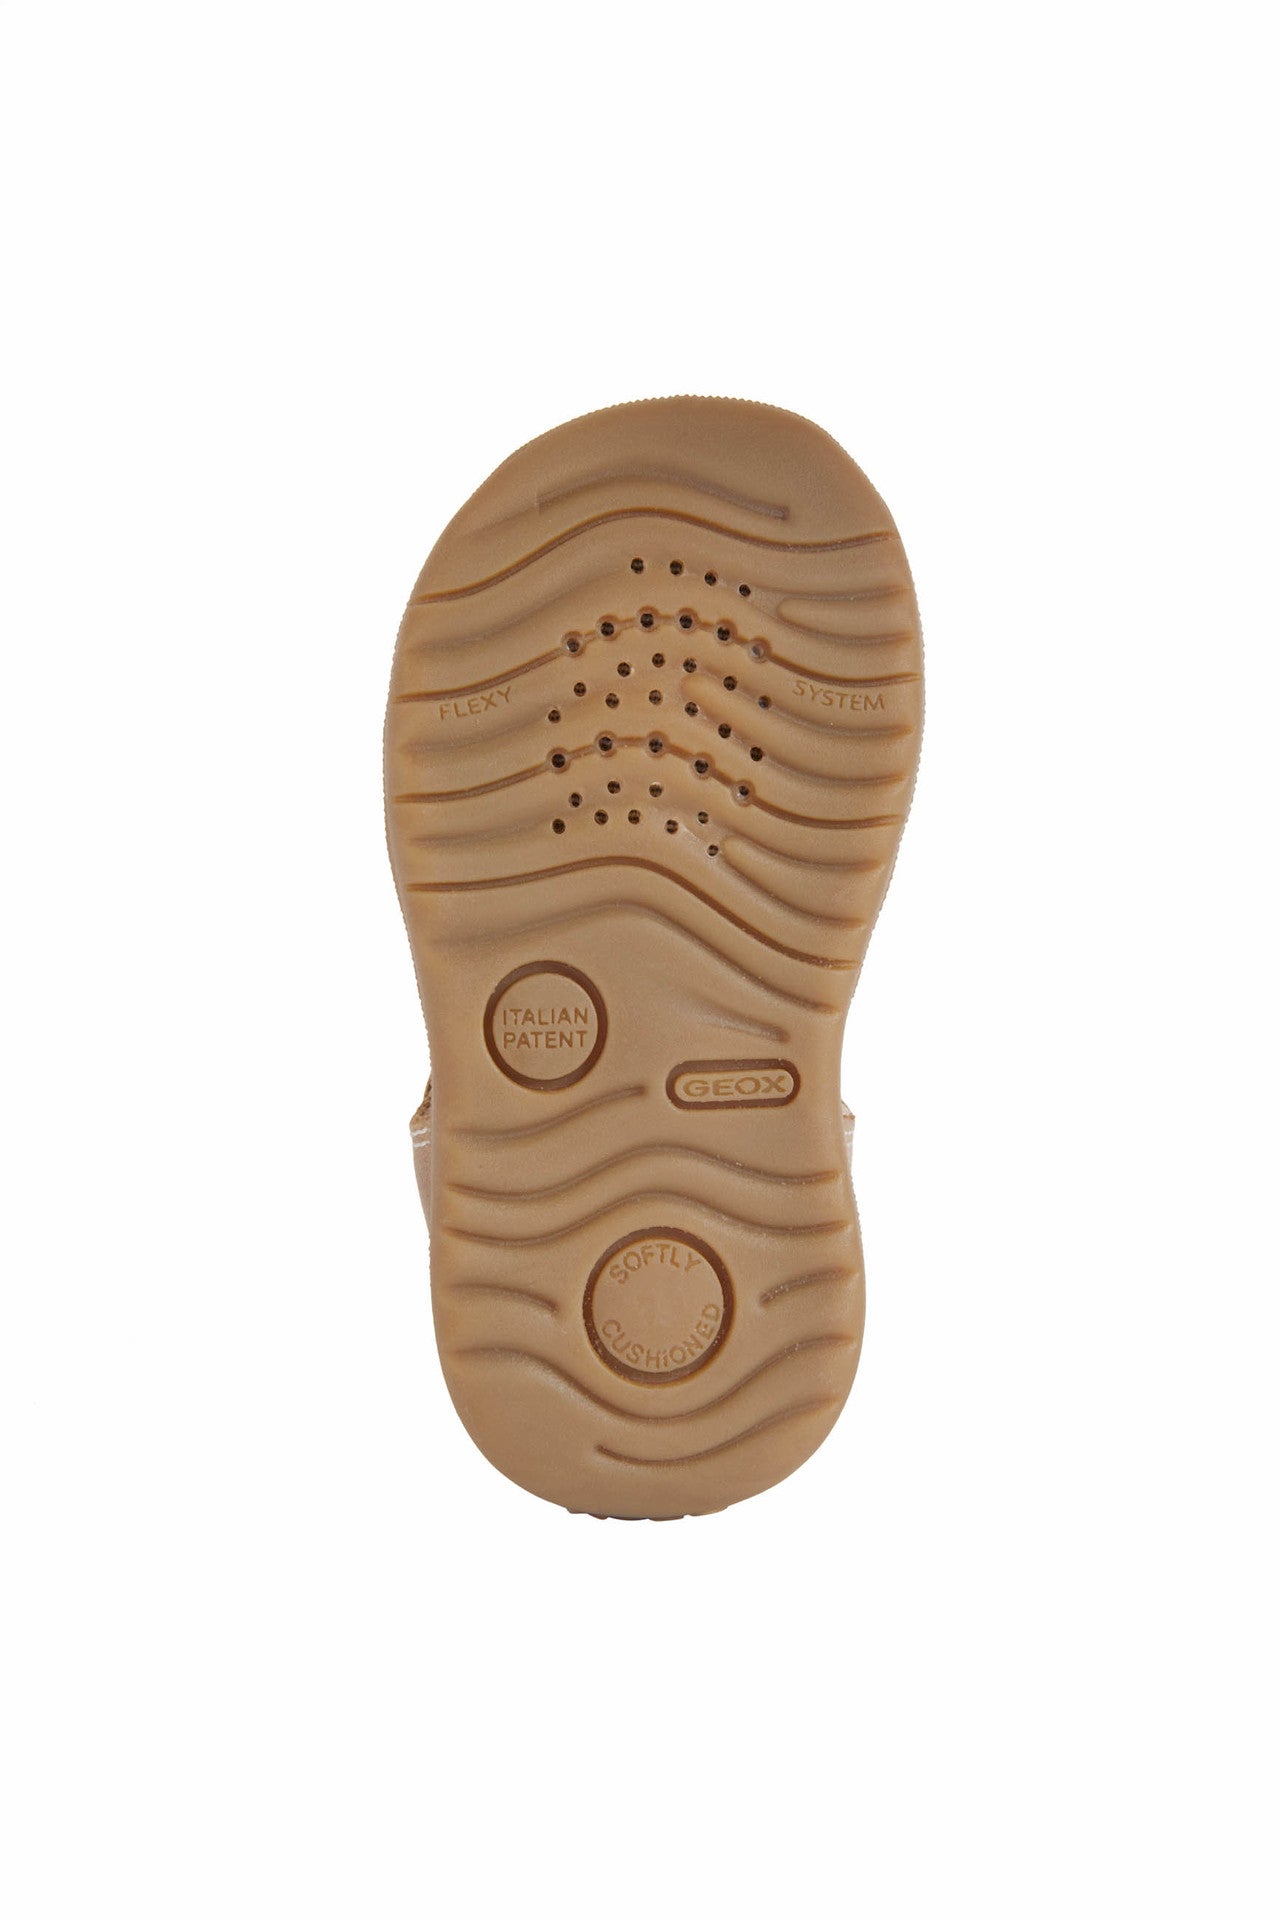 Macchia Baby's Caramel Leather Sandal